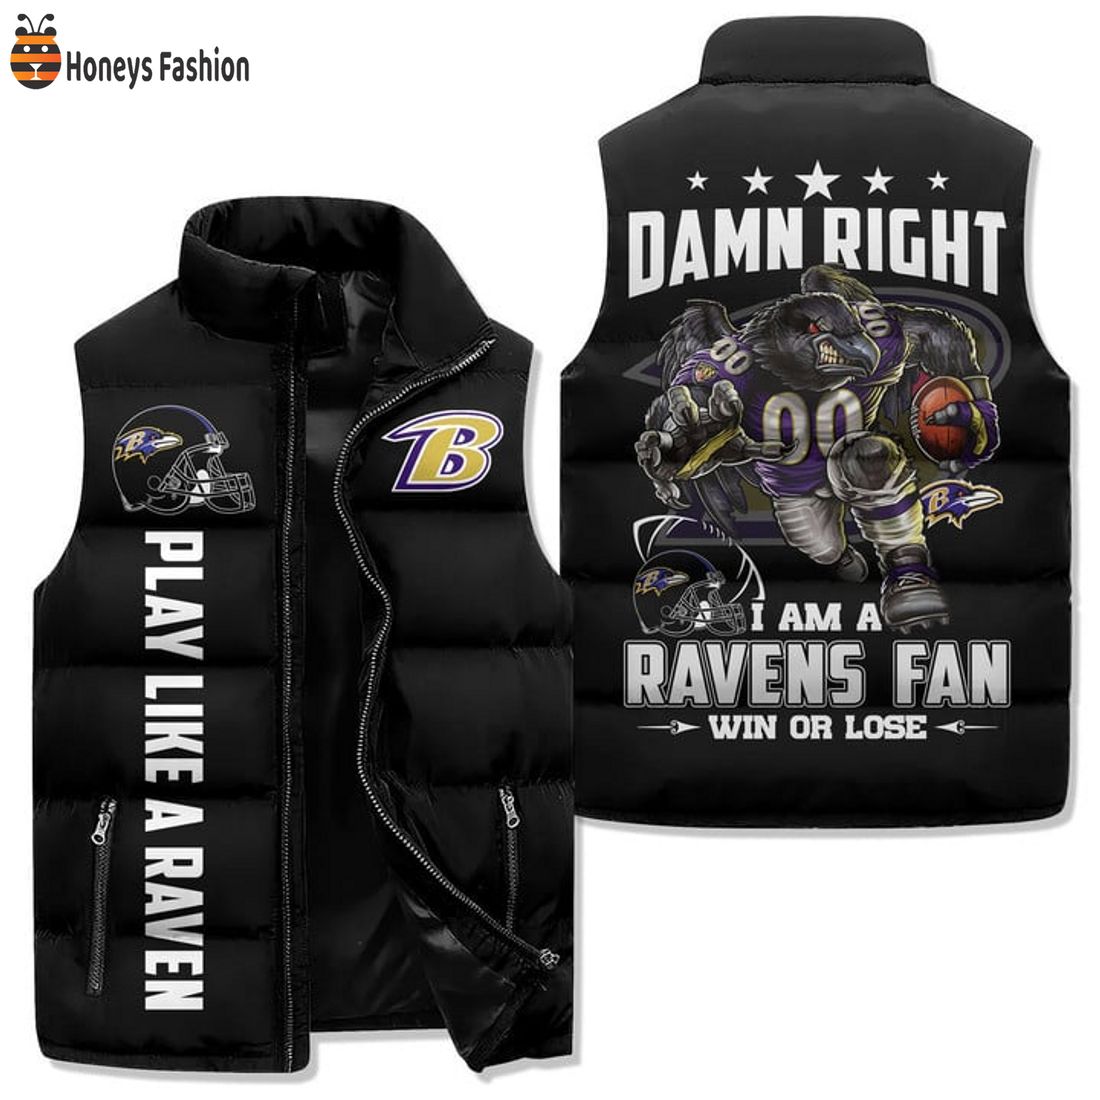 TRENDING Baltimore Ravens Damm Right Ravens Fan Win Or Lose Black Puffer Sleeveless Jacket